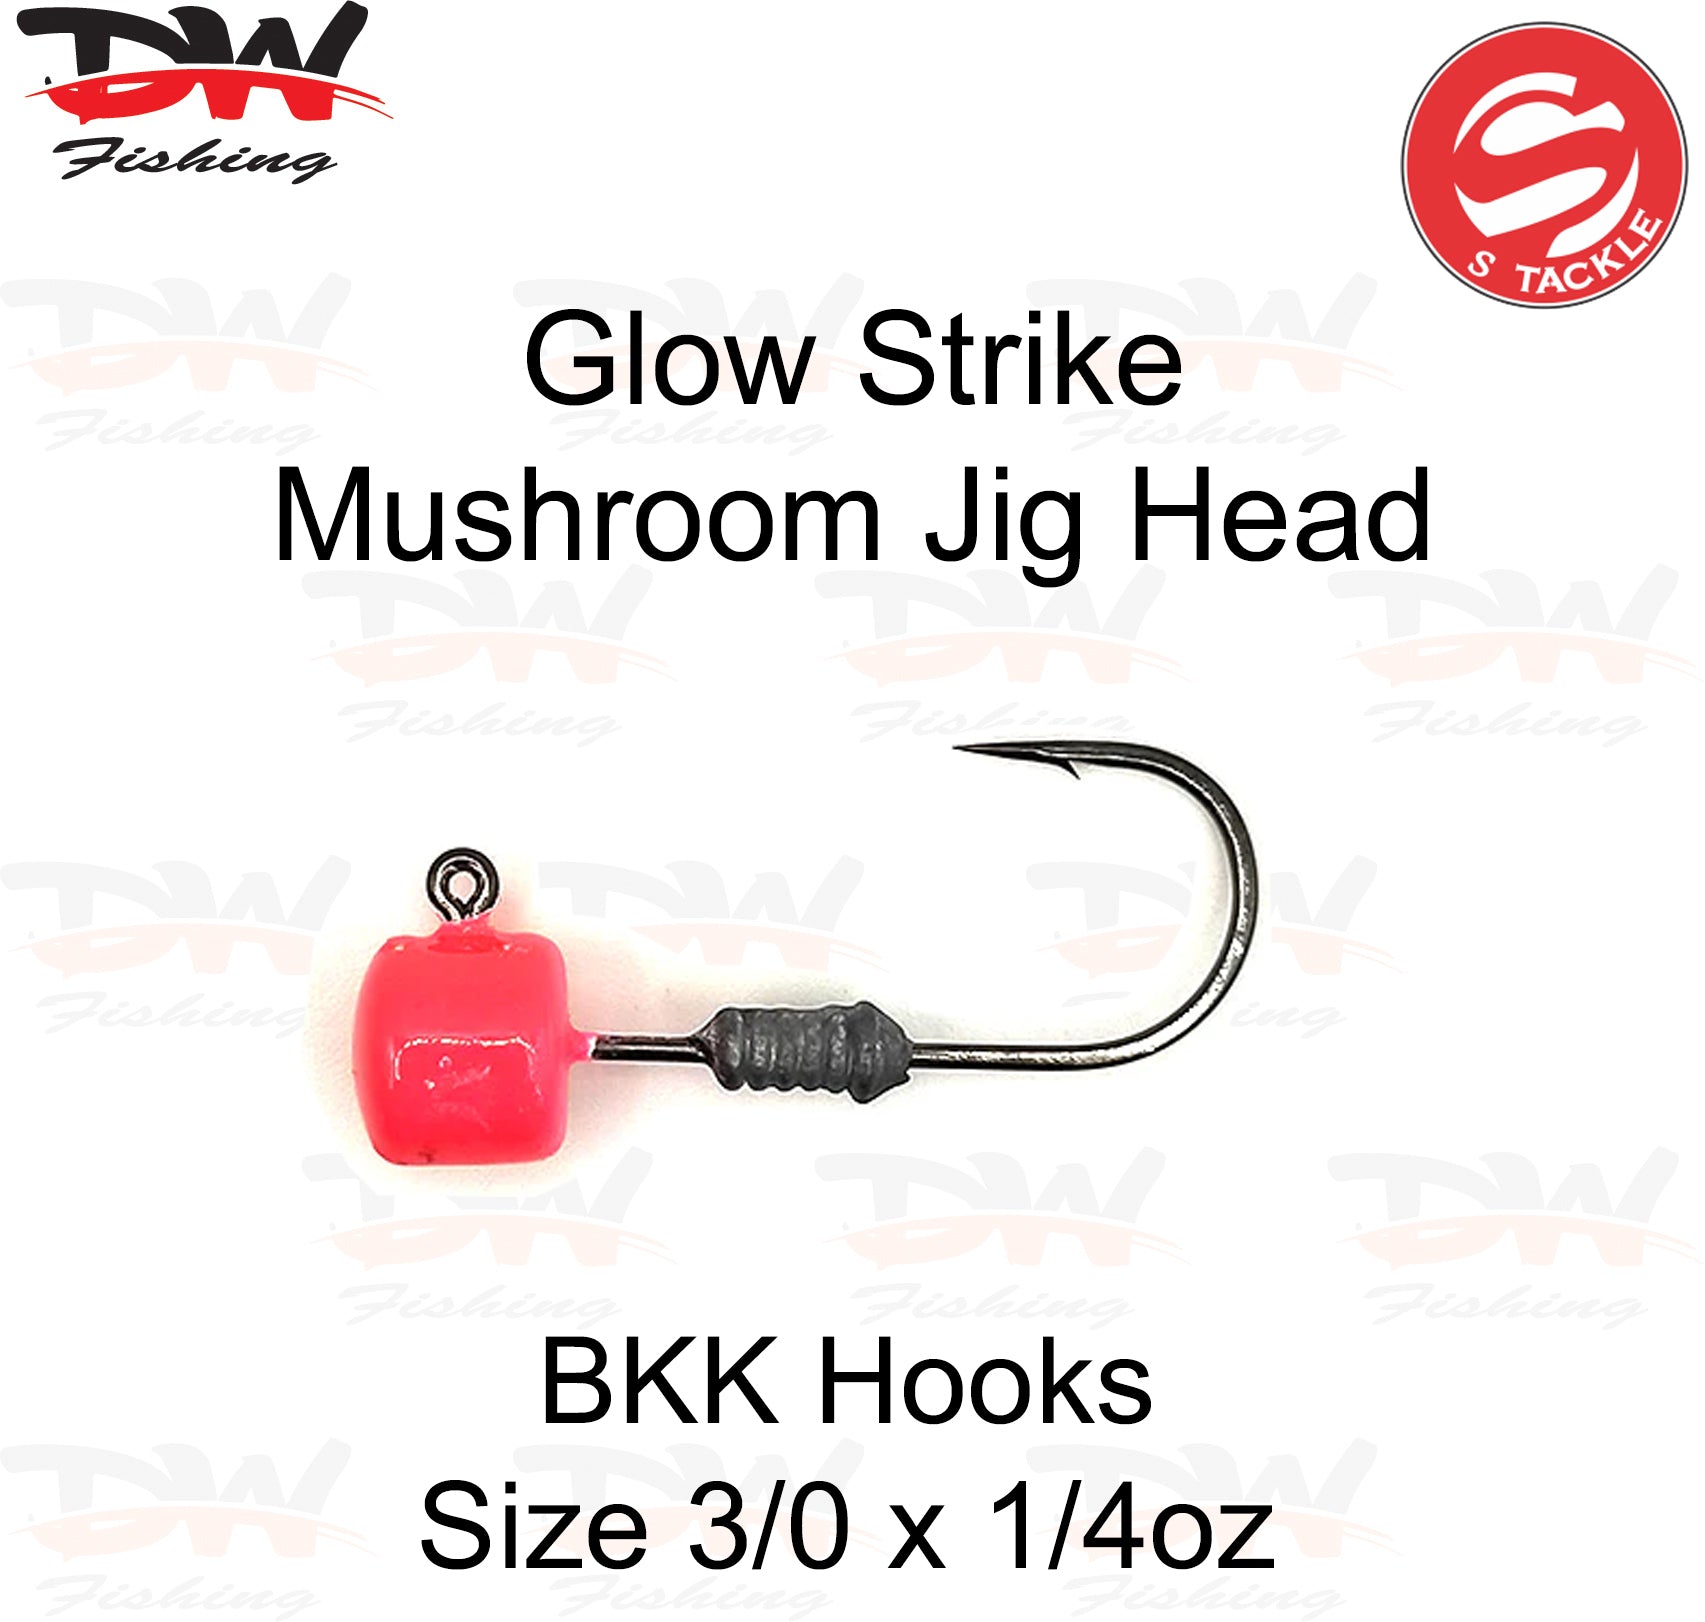 S Tackle Glow strike mushroom jig head on BKK hooks size 3/0 1/4oz